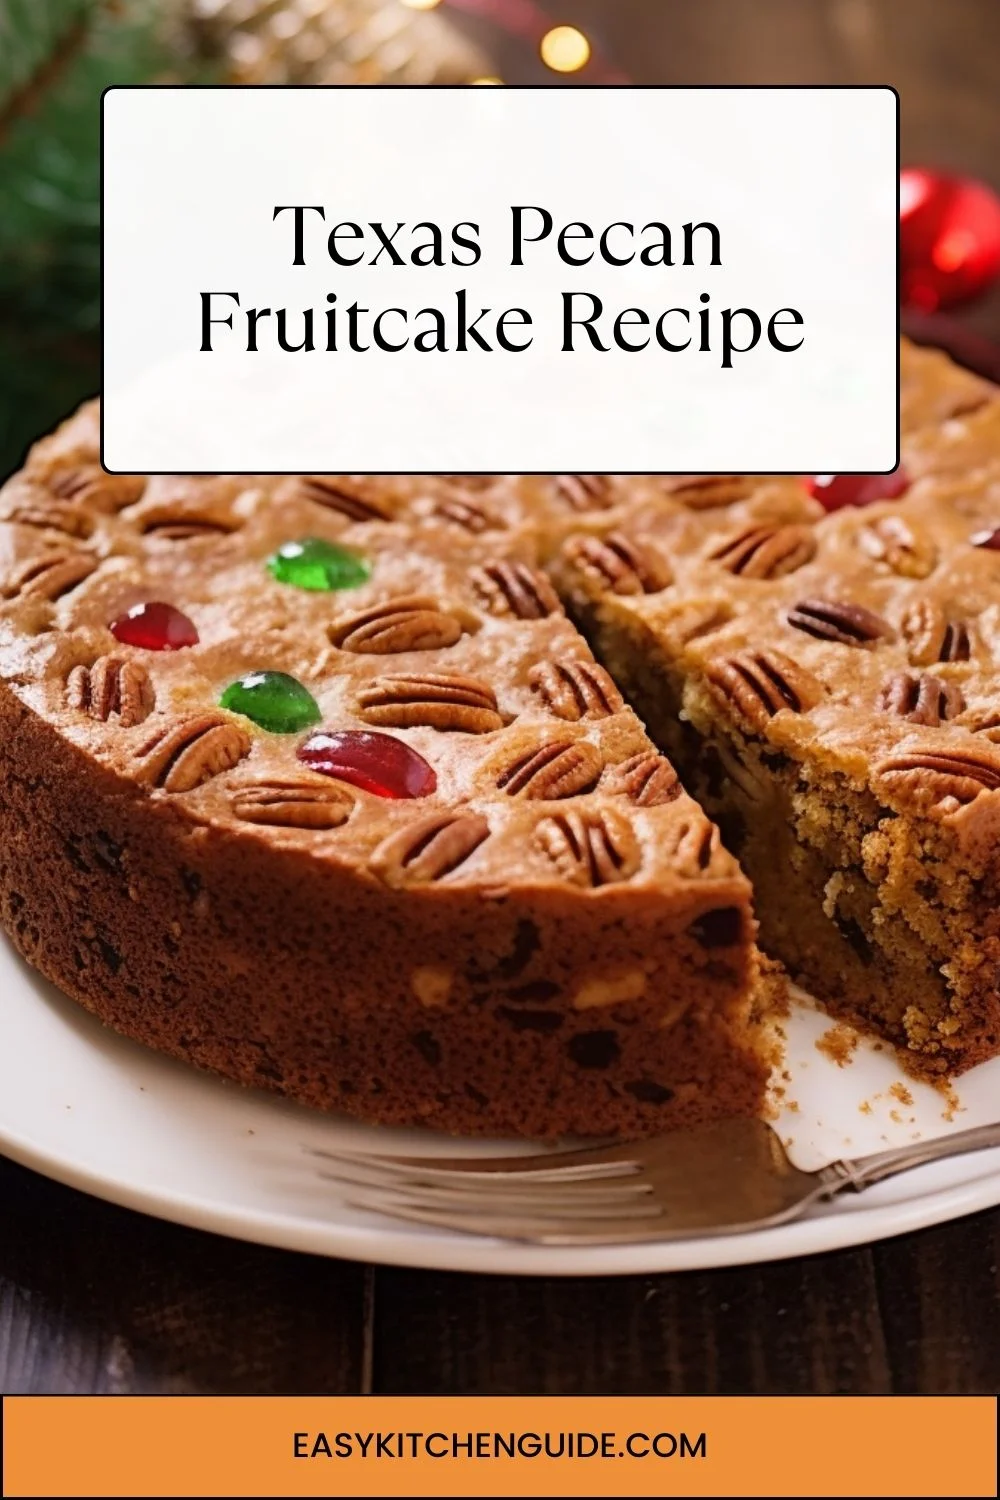 Texas Pecan Fruitcake Recipe